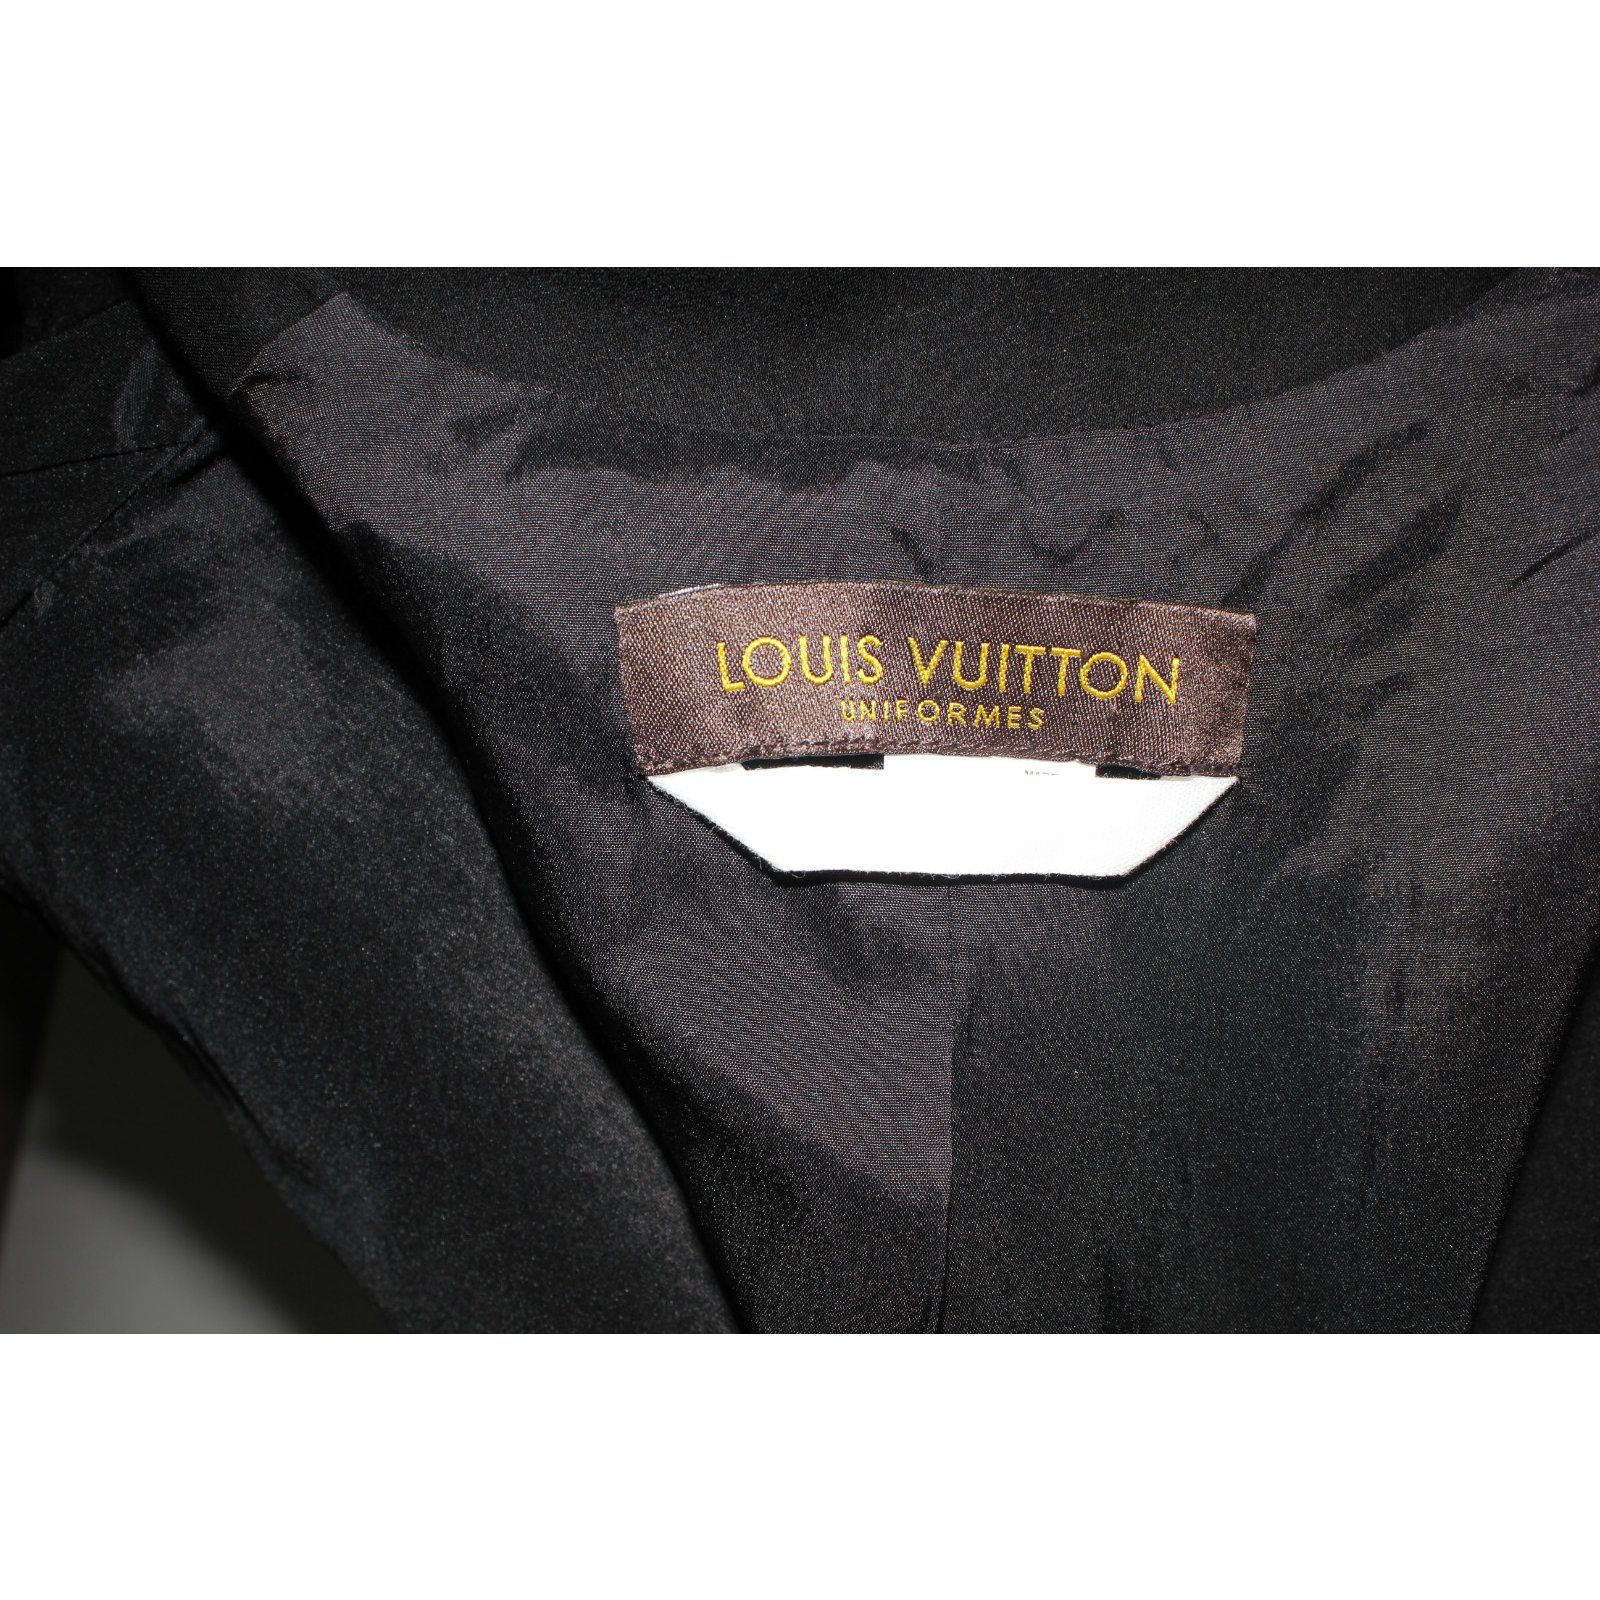 Louis Vuitton Uniform Blazer Jacket